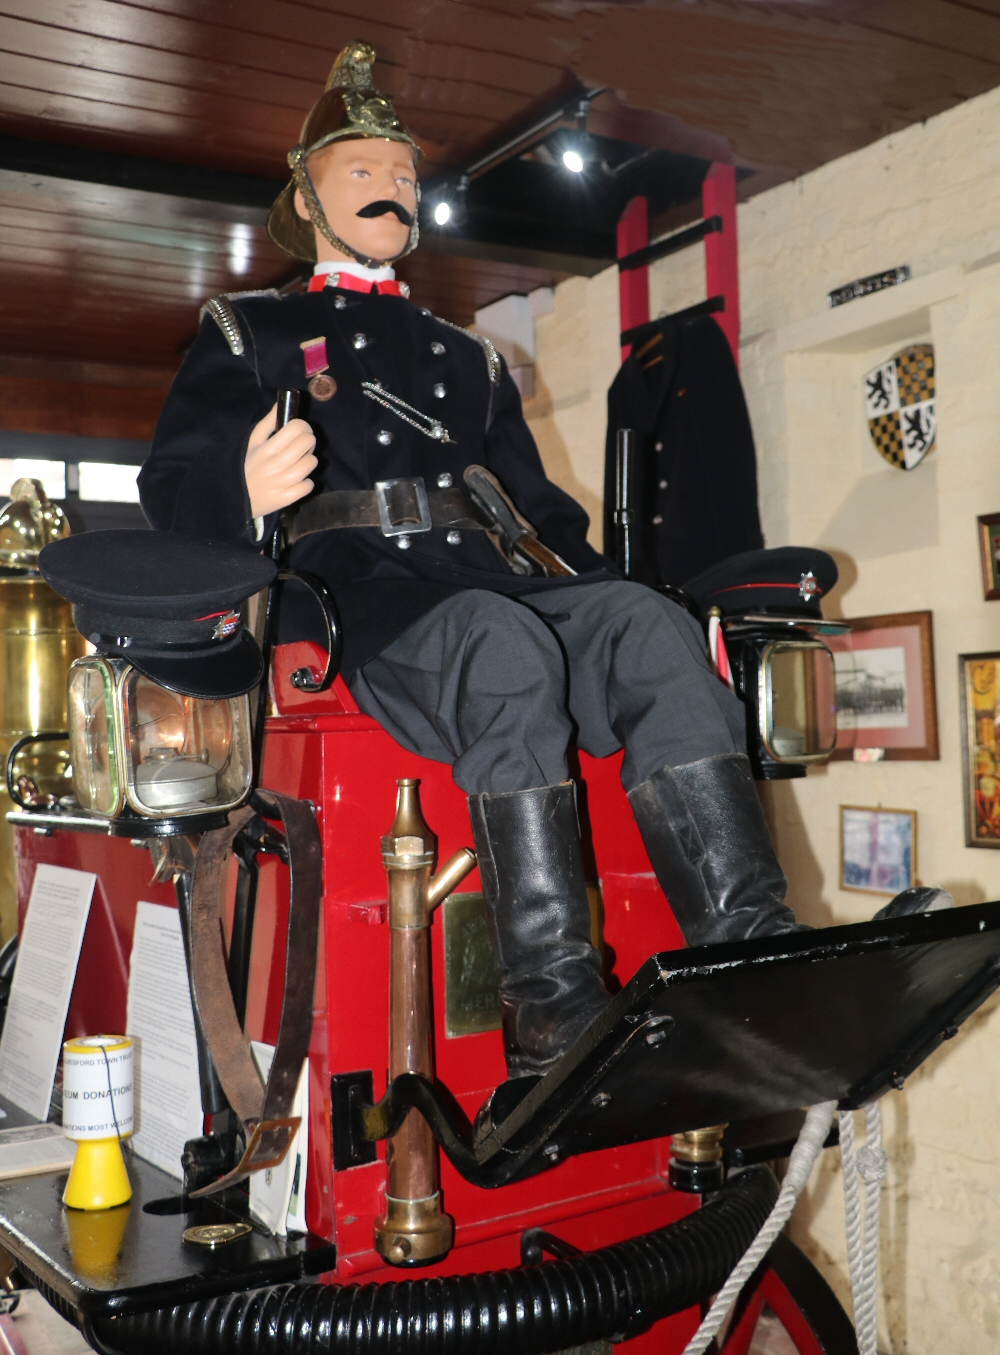 The Victorian Fireman